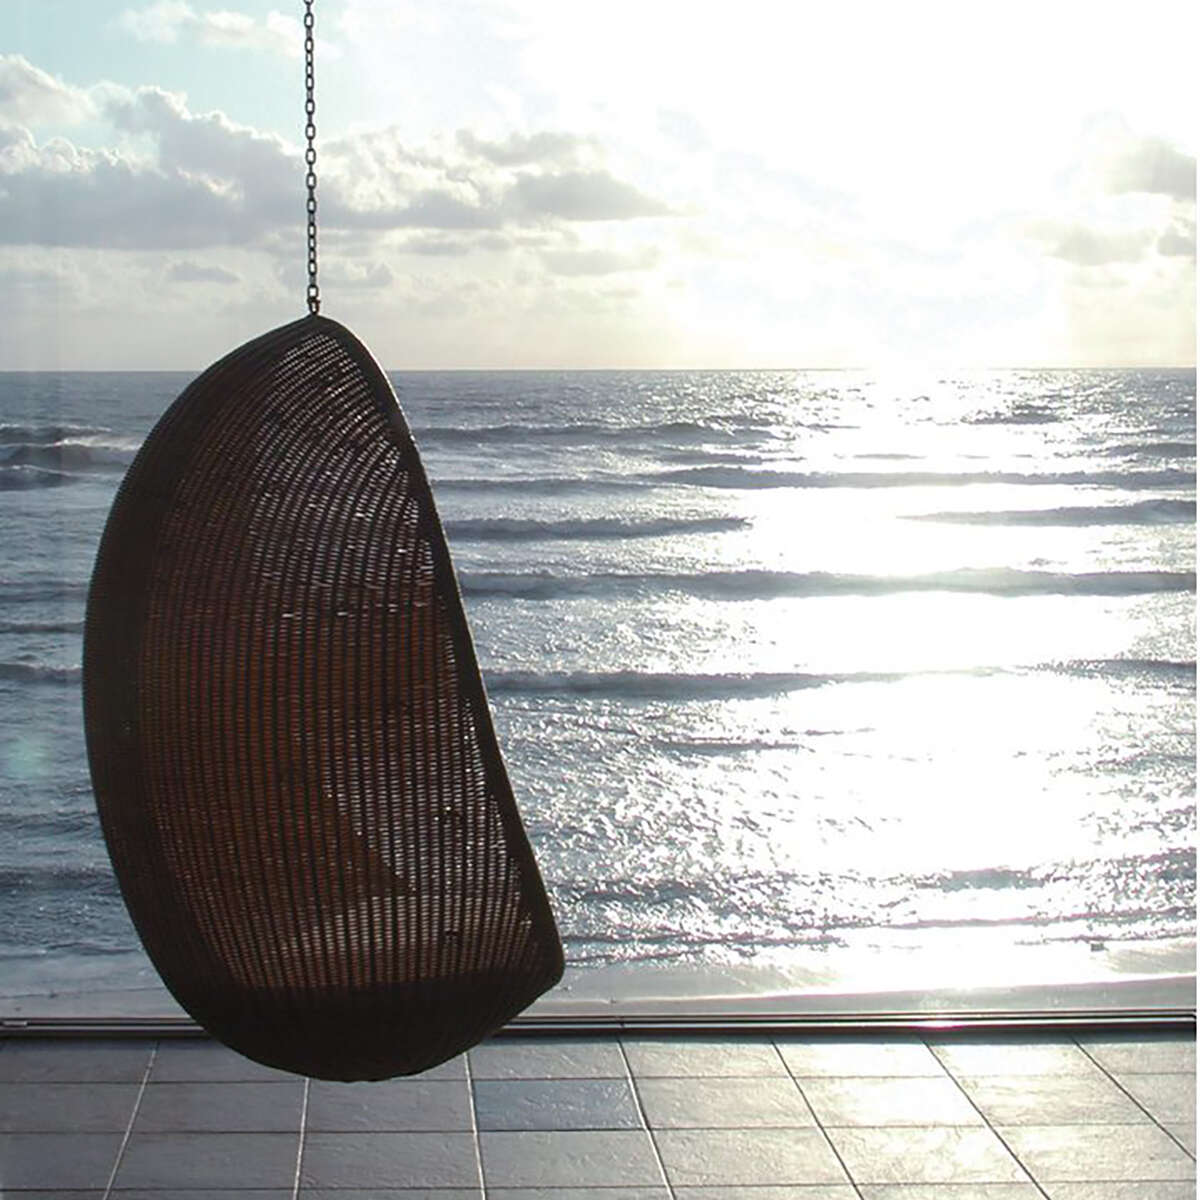 Modern Garden Co egg chair Sunset